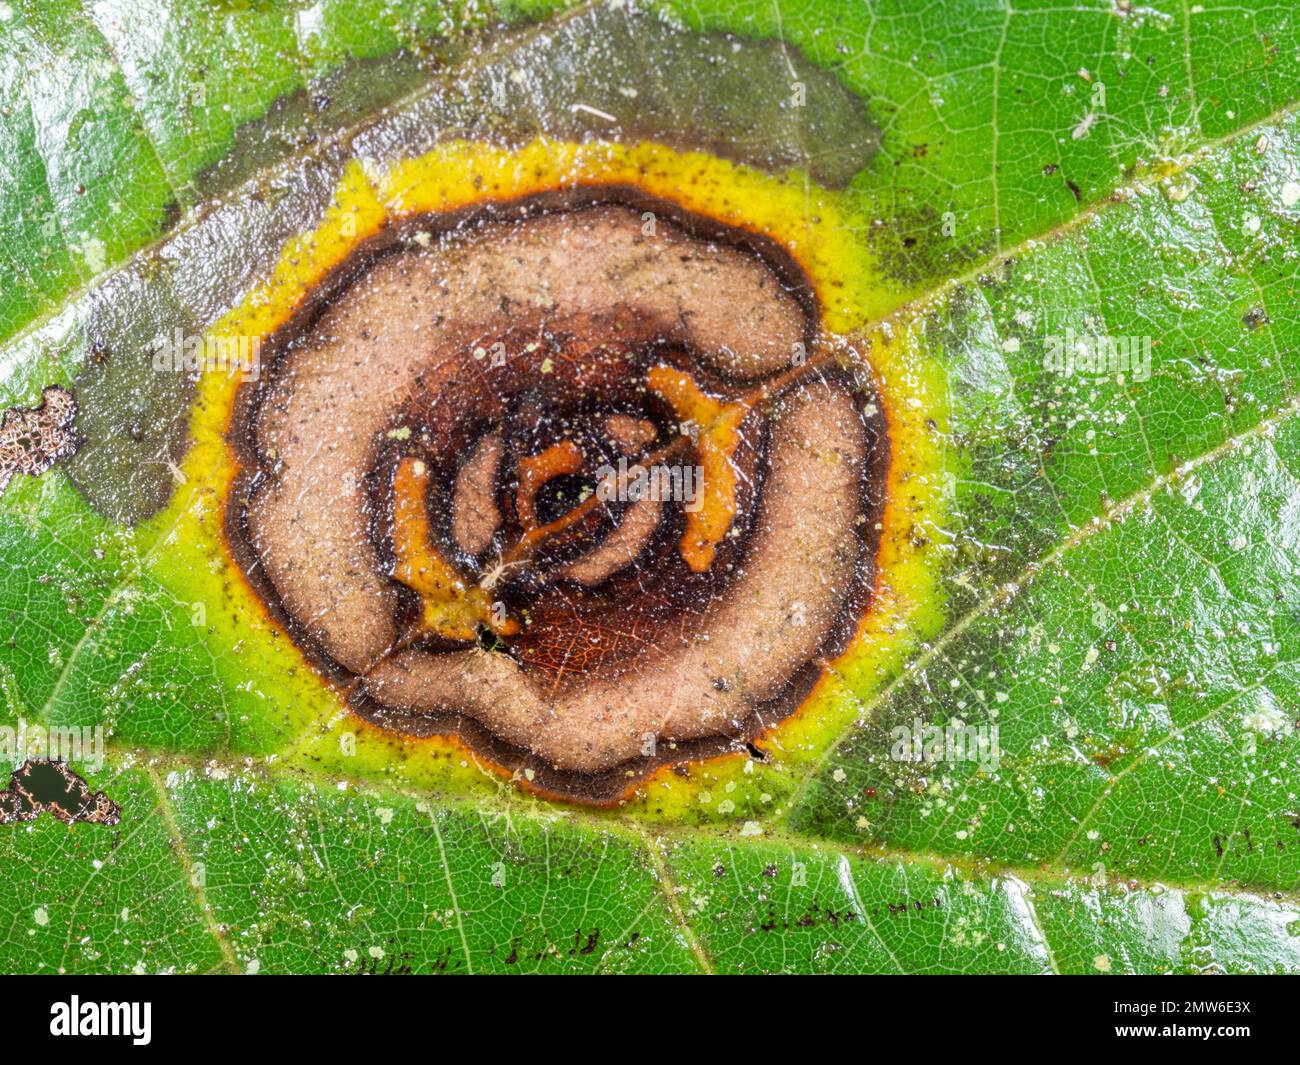 Leaf of a rainforest shrub infected with a fungal disease, Orellana province, Ecuador Stock Photo